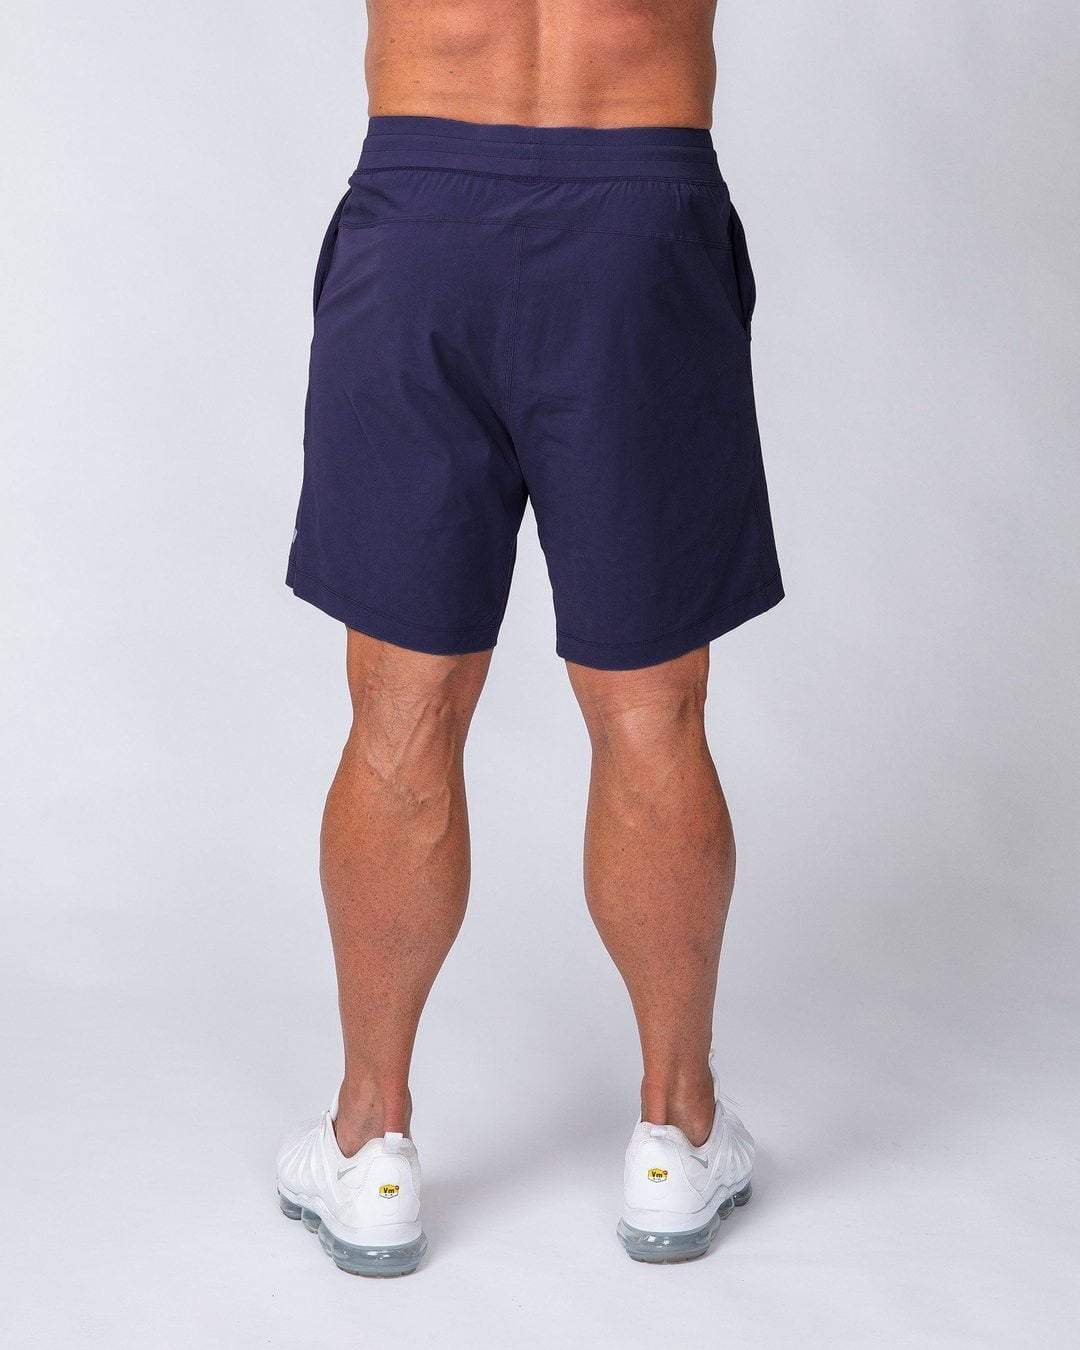 musclenation Mens Training Shorts - Navy